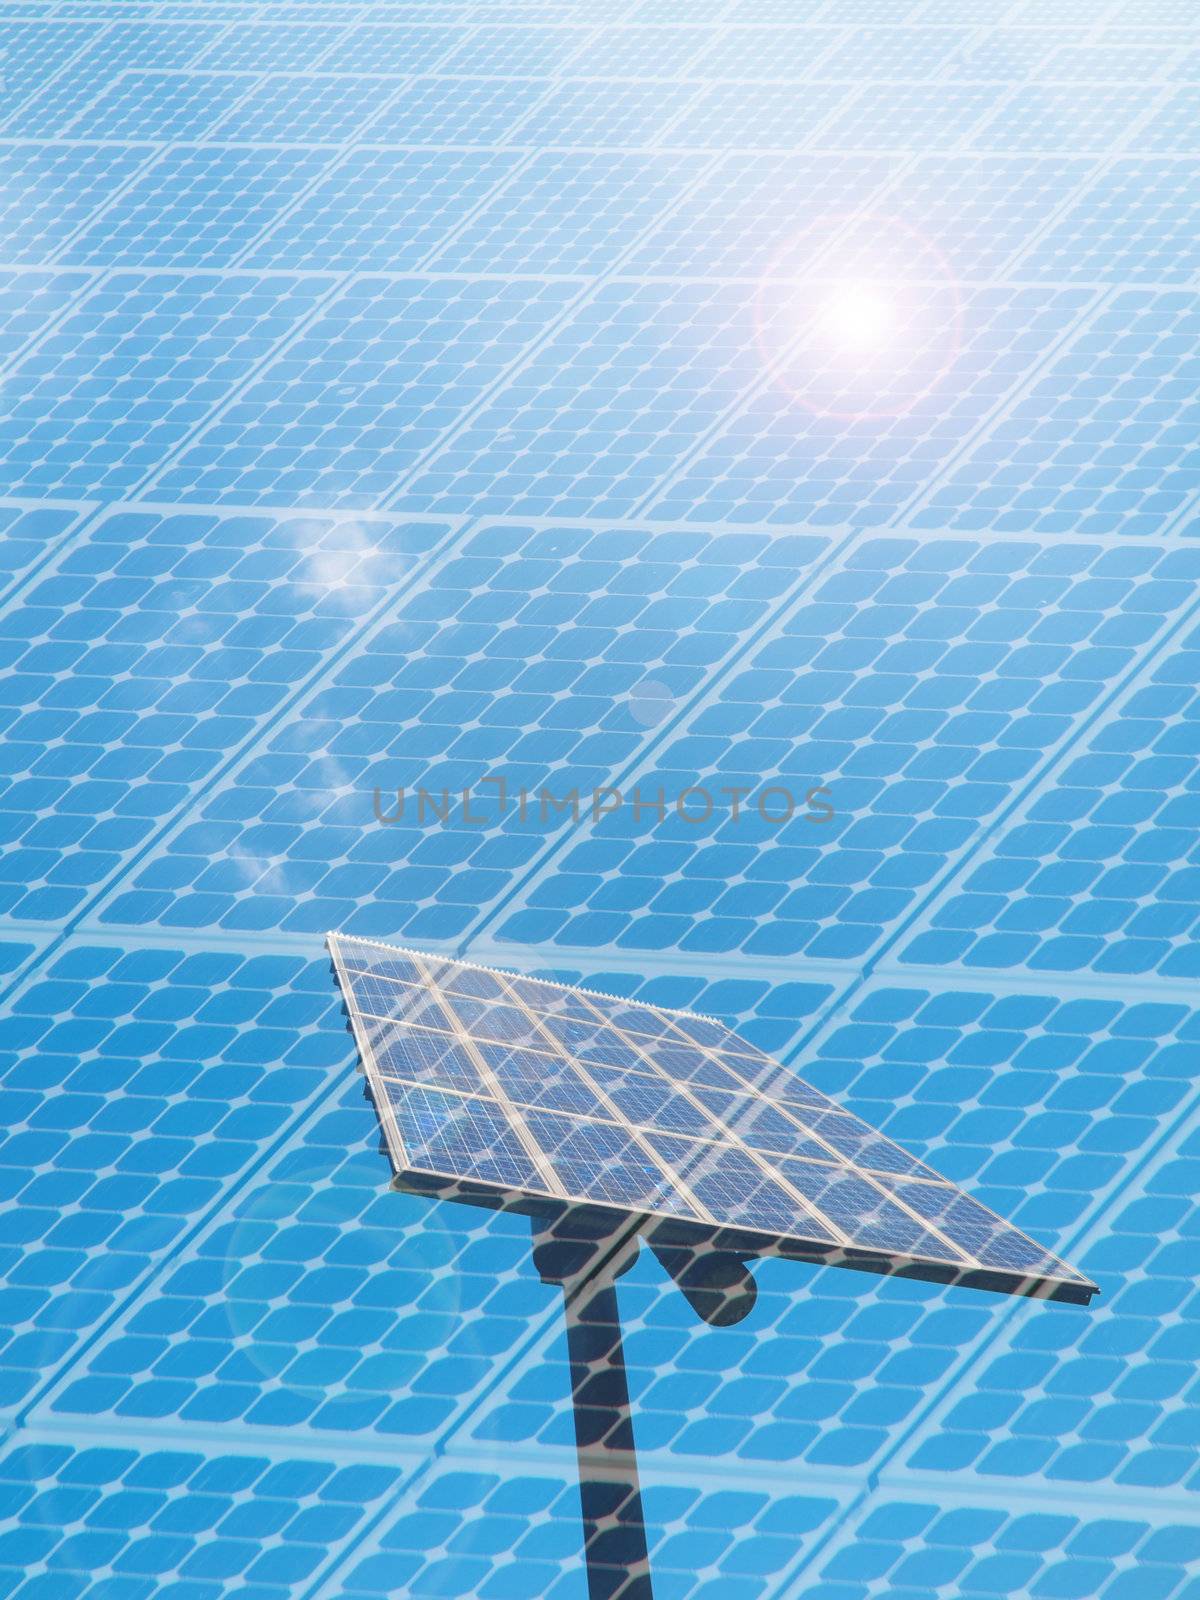 Solar panel under blue sky with sun flare